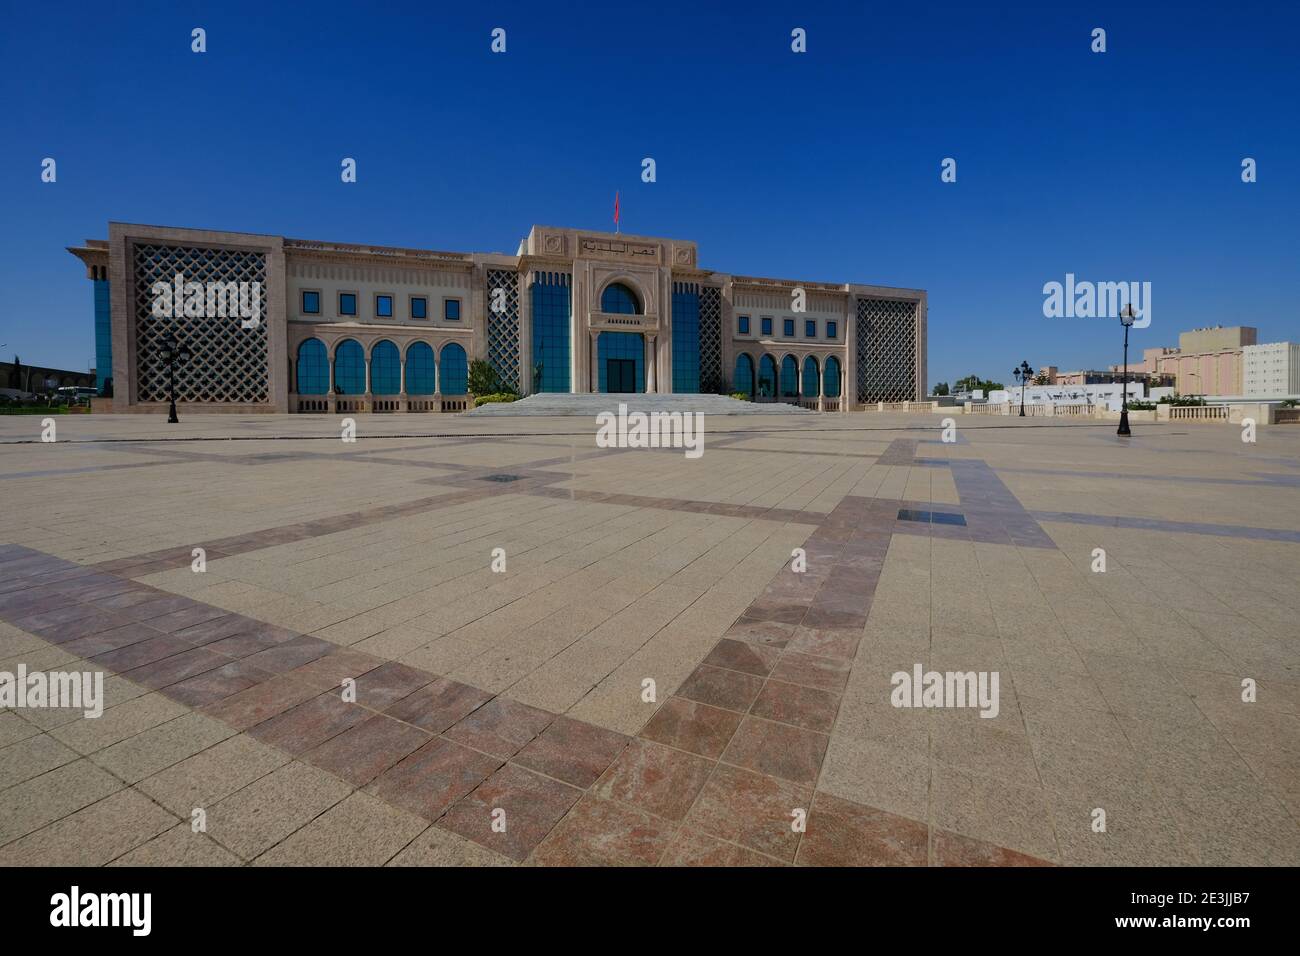 Facade of the city hall building in Tunis, Tunisia. Stock Photo